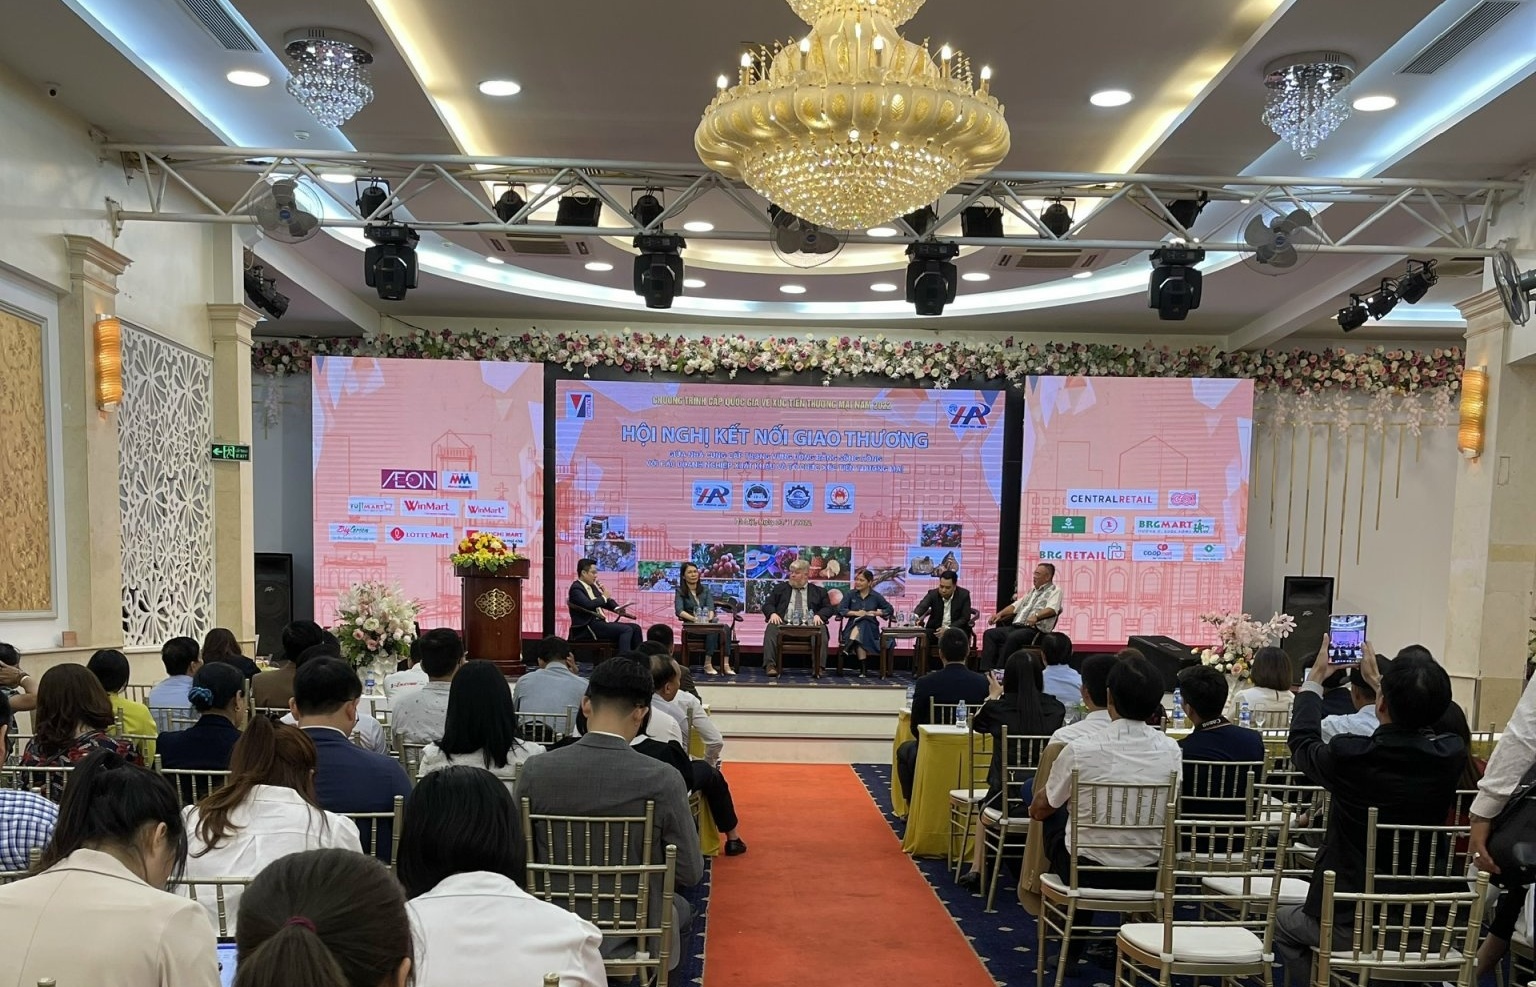 Increasing trade connectivity between Hanoi and localities